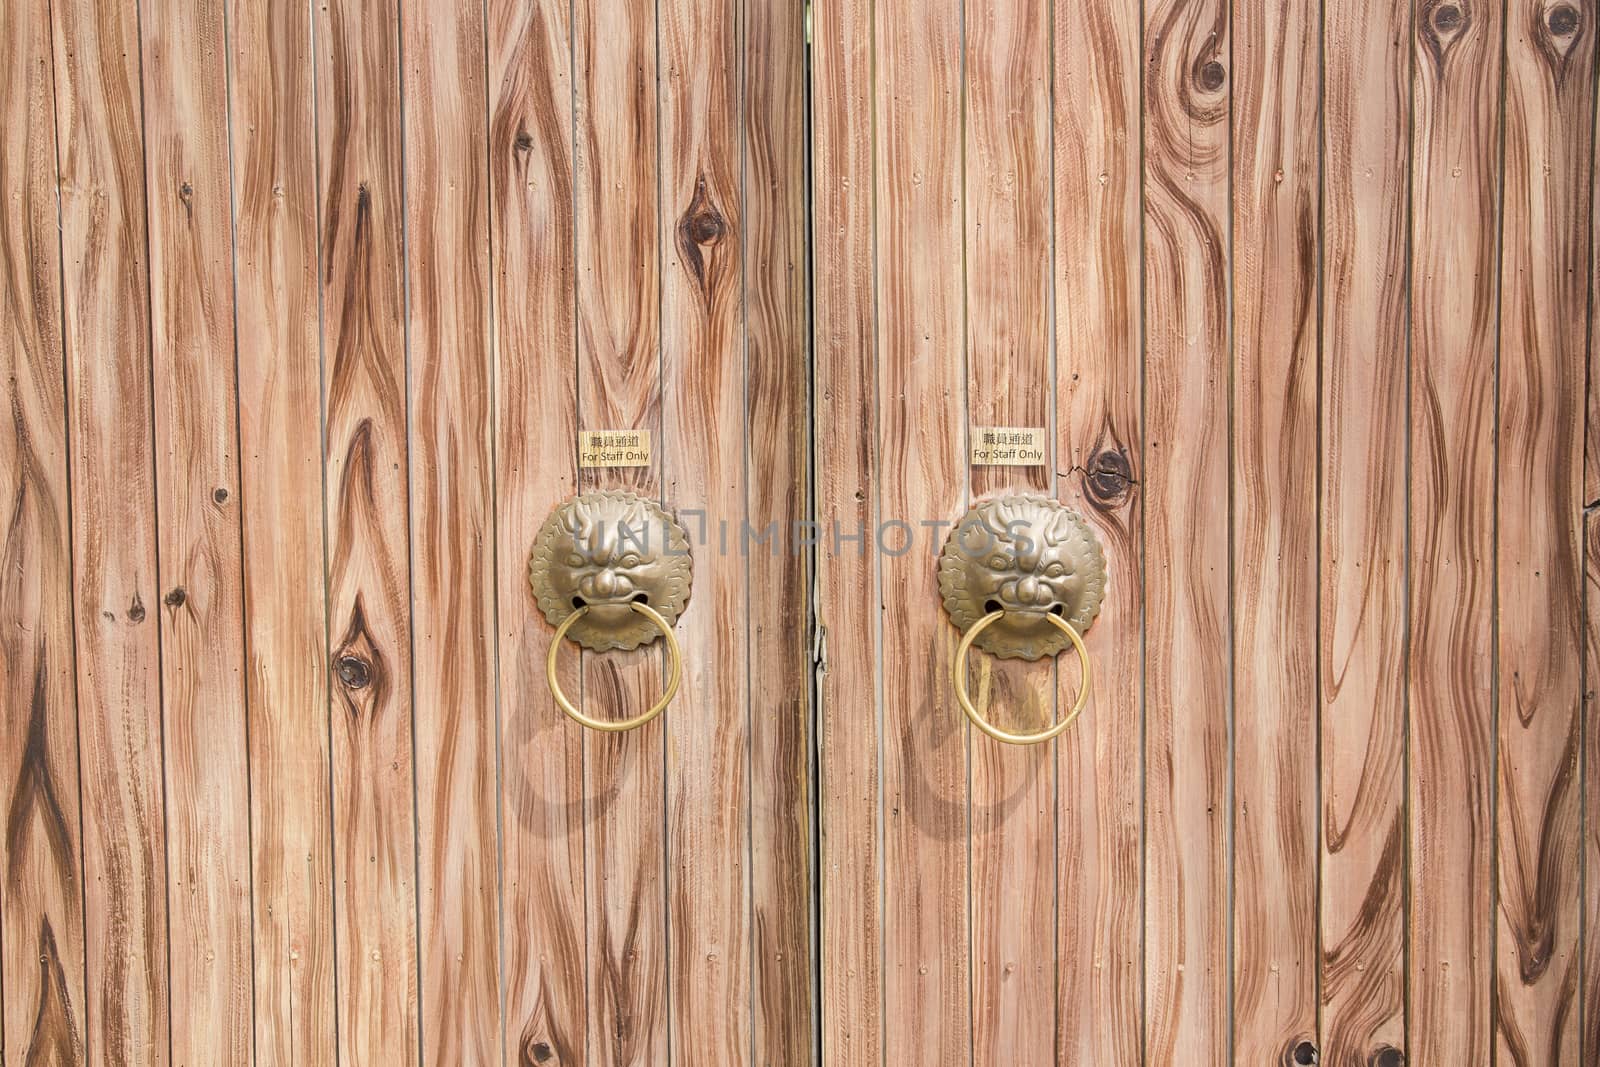 Brown wood door texture and background by 2nix